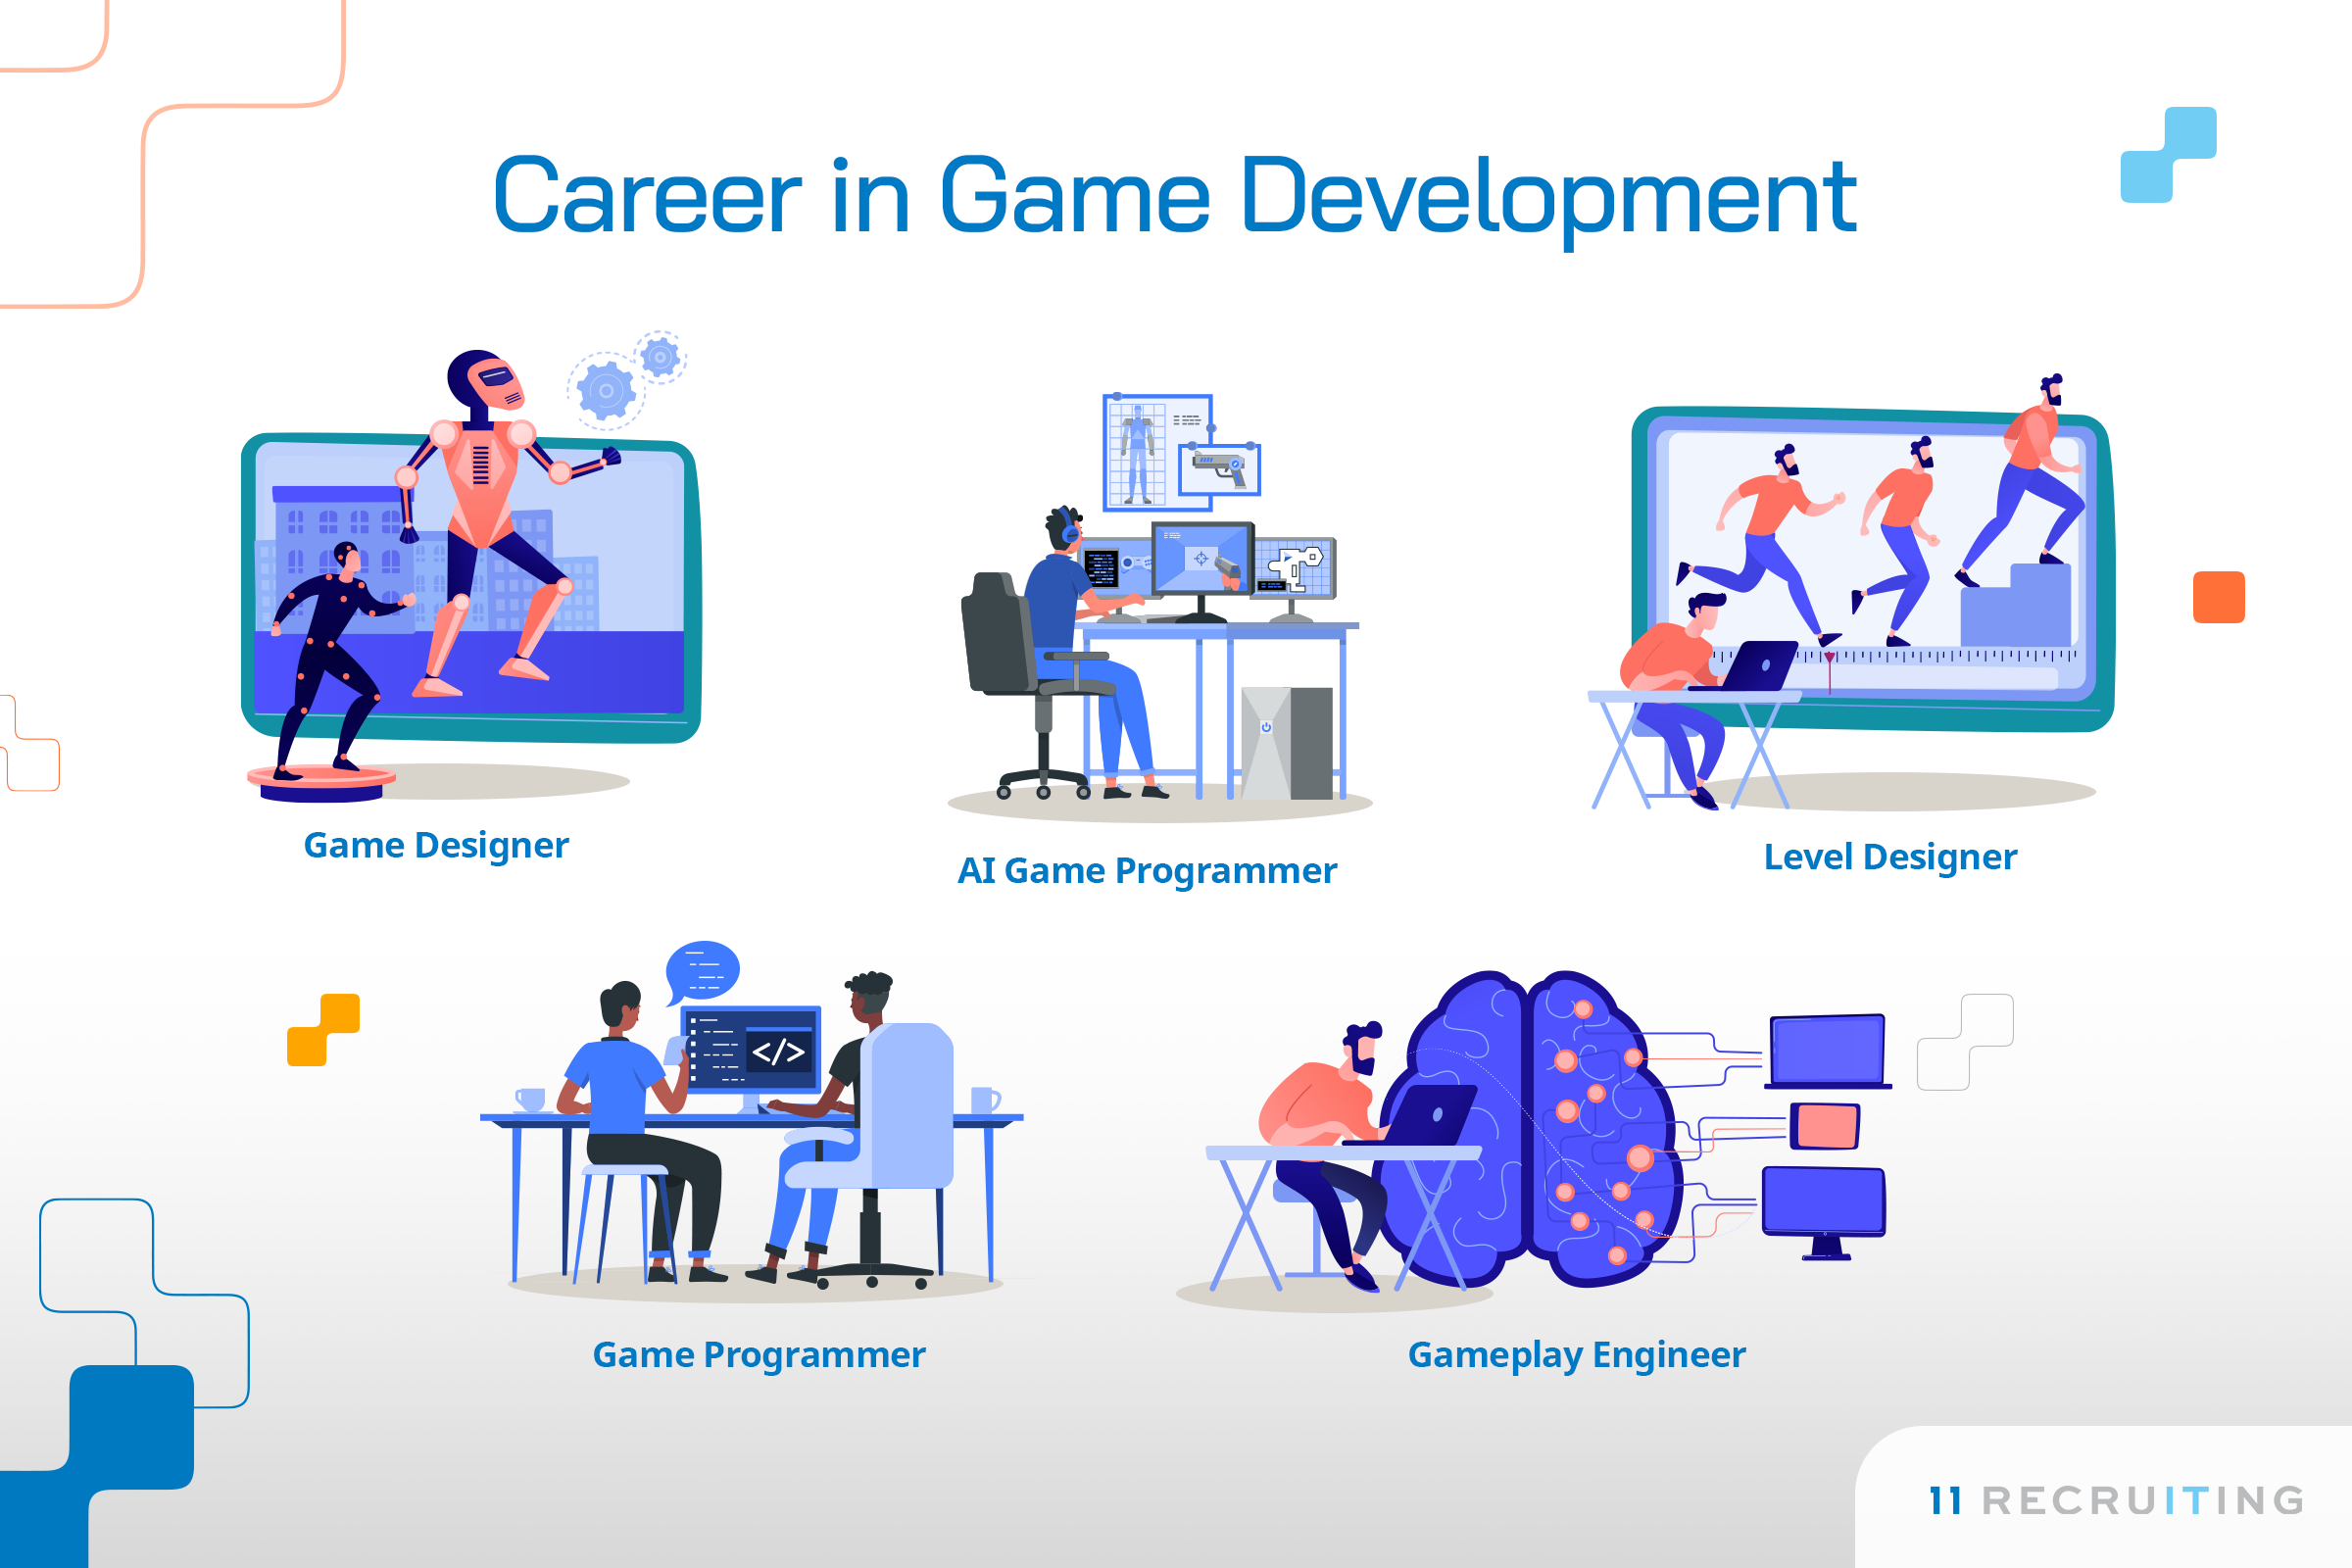 Career in Game Development